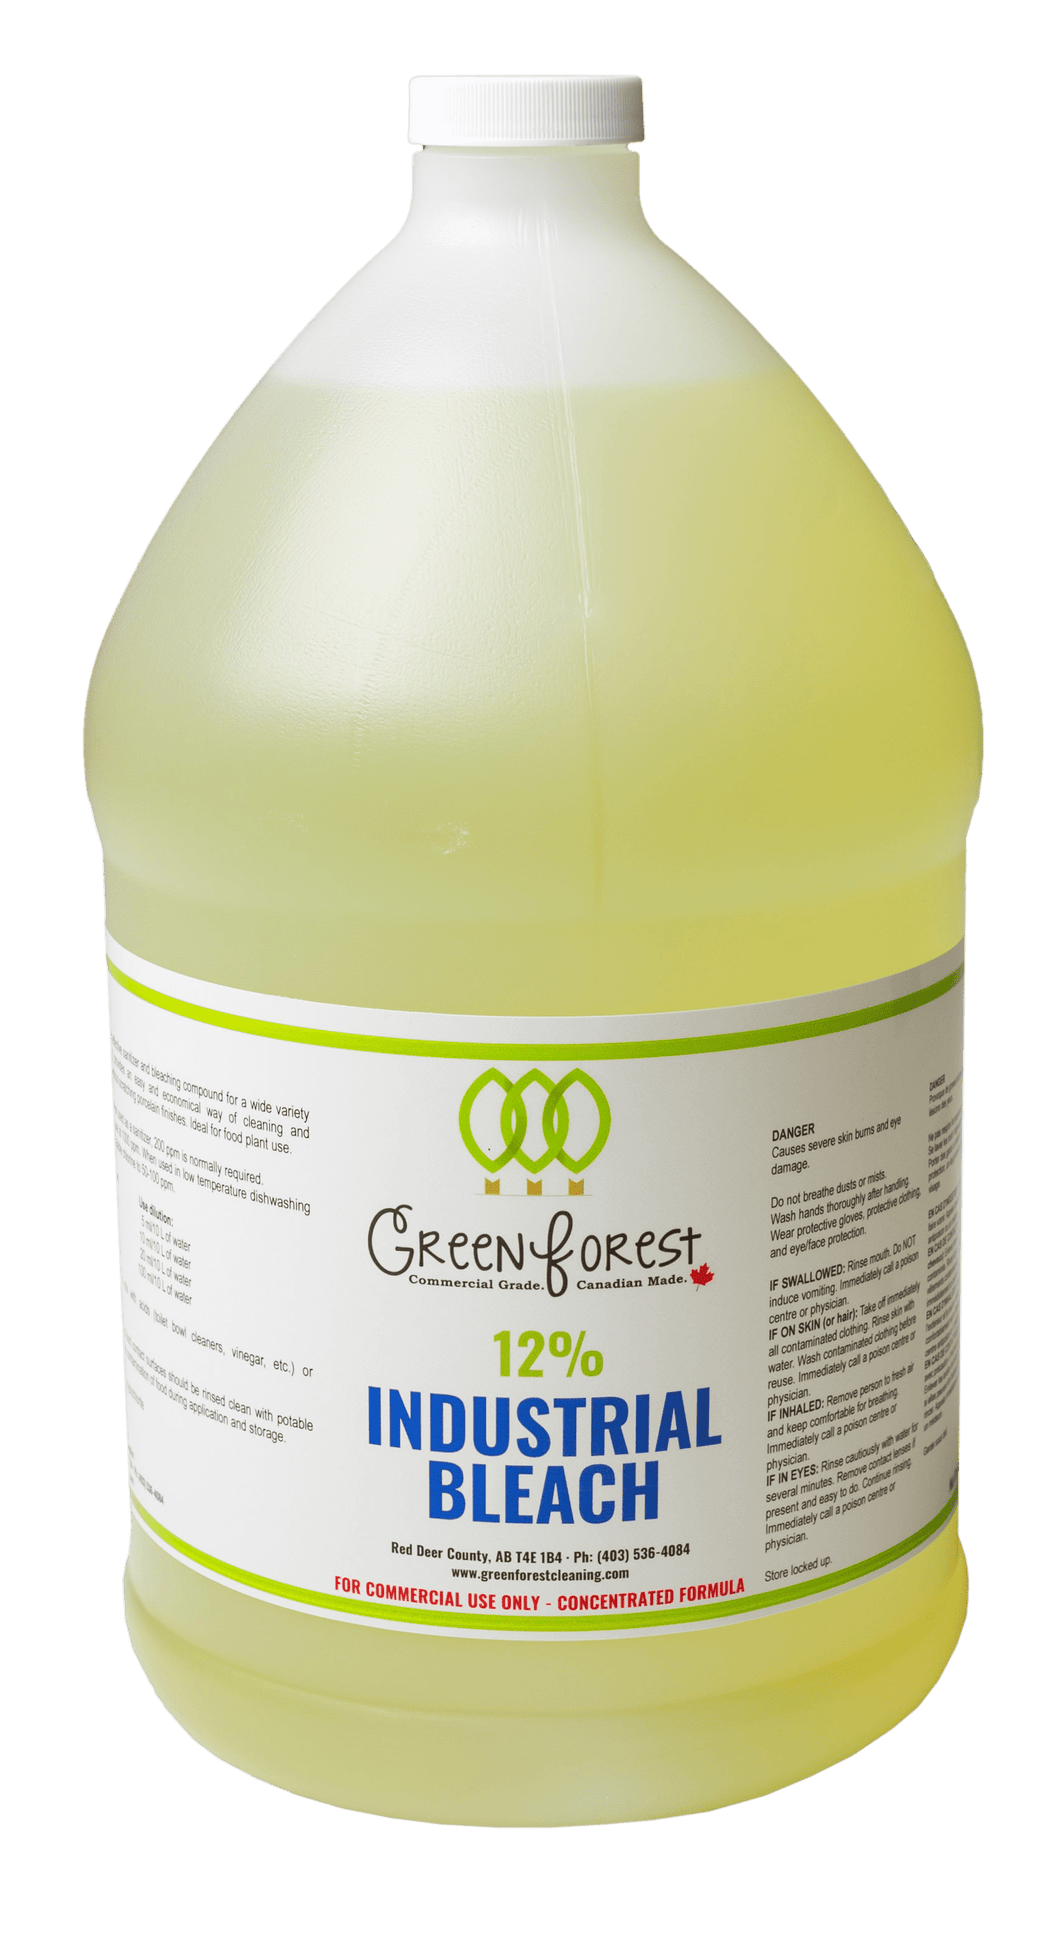 Commercial Grade Liquid Chlorine - Pallet